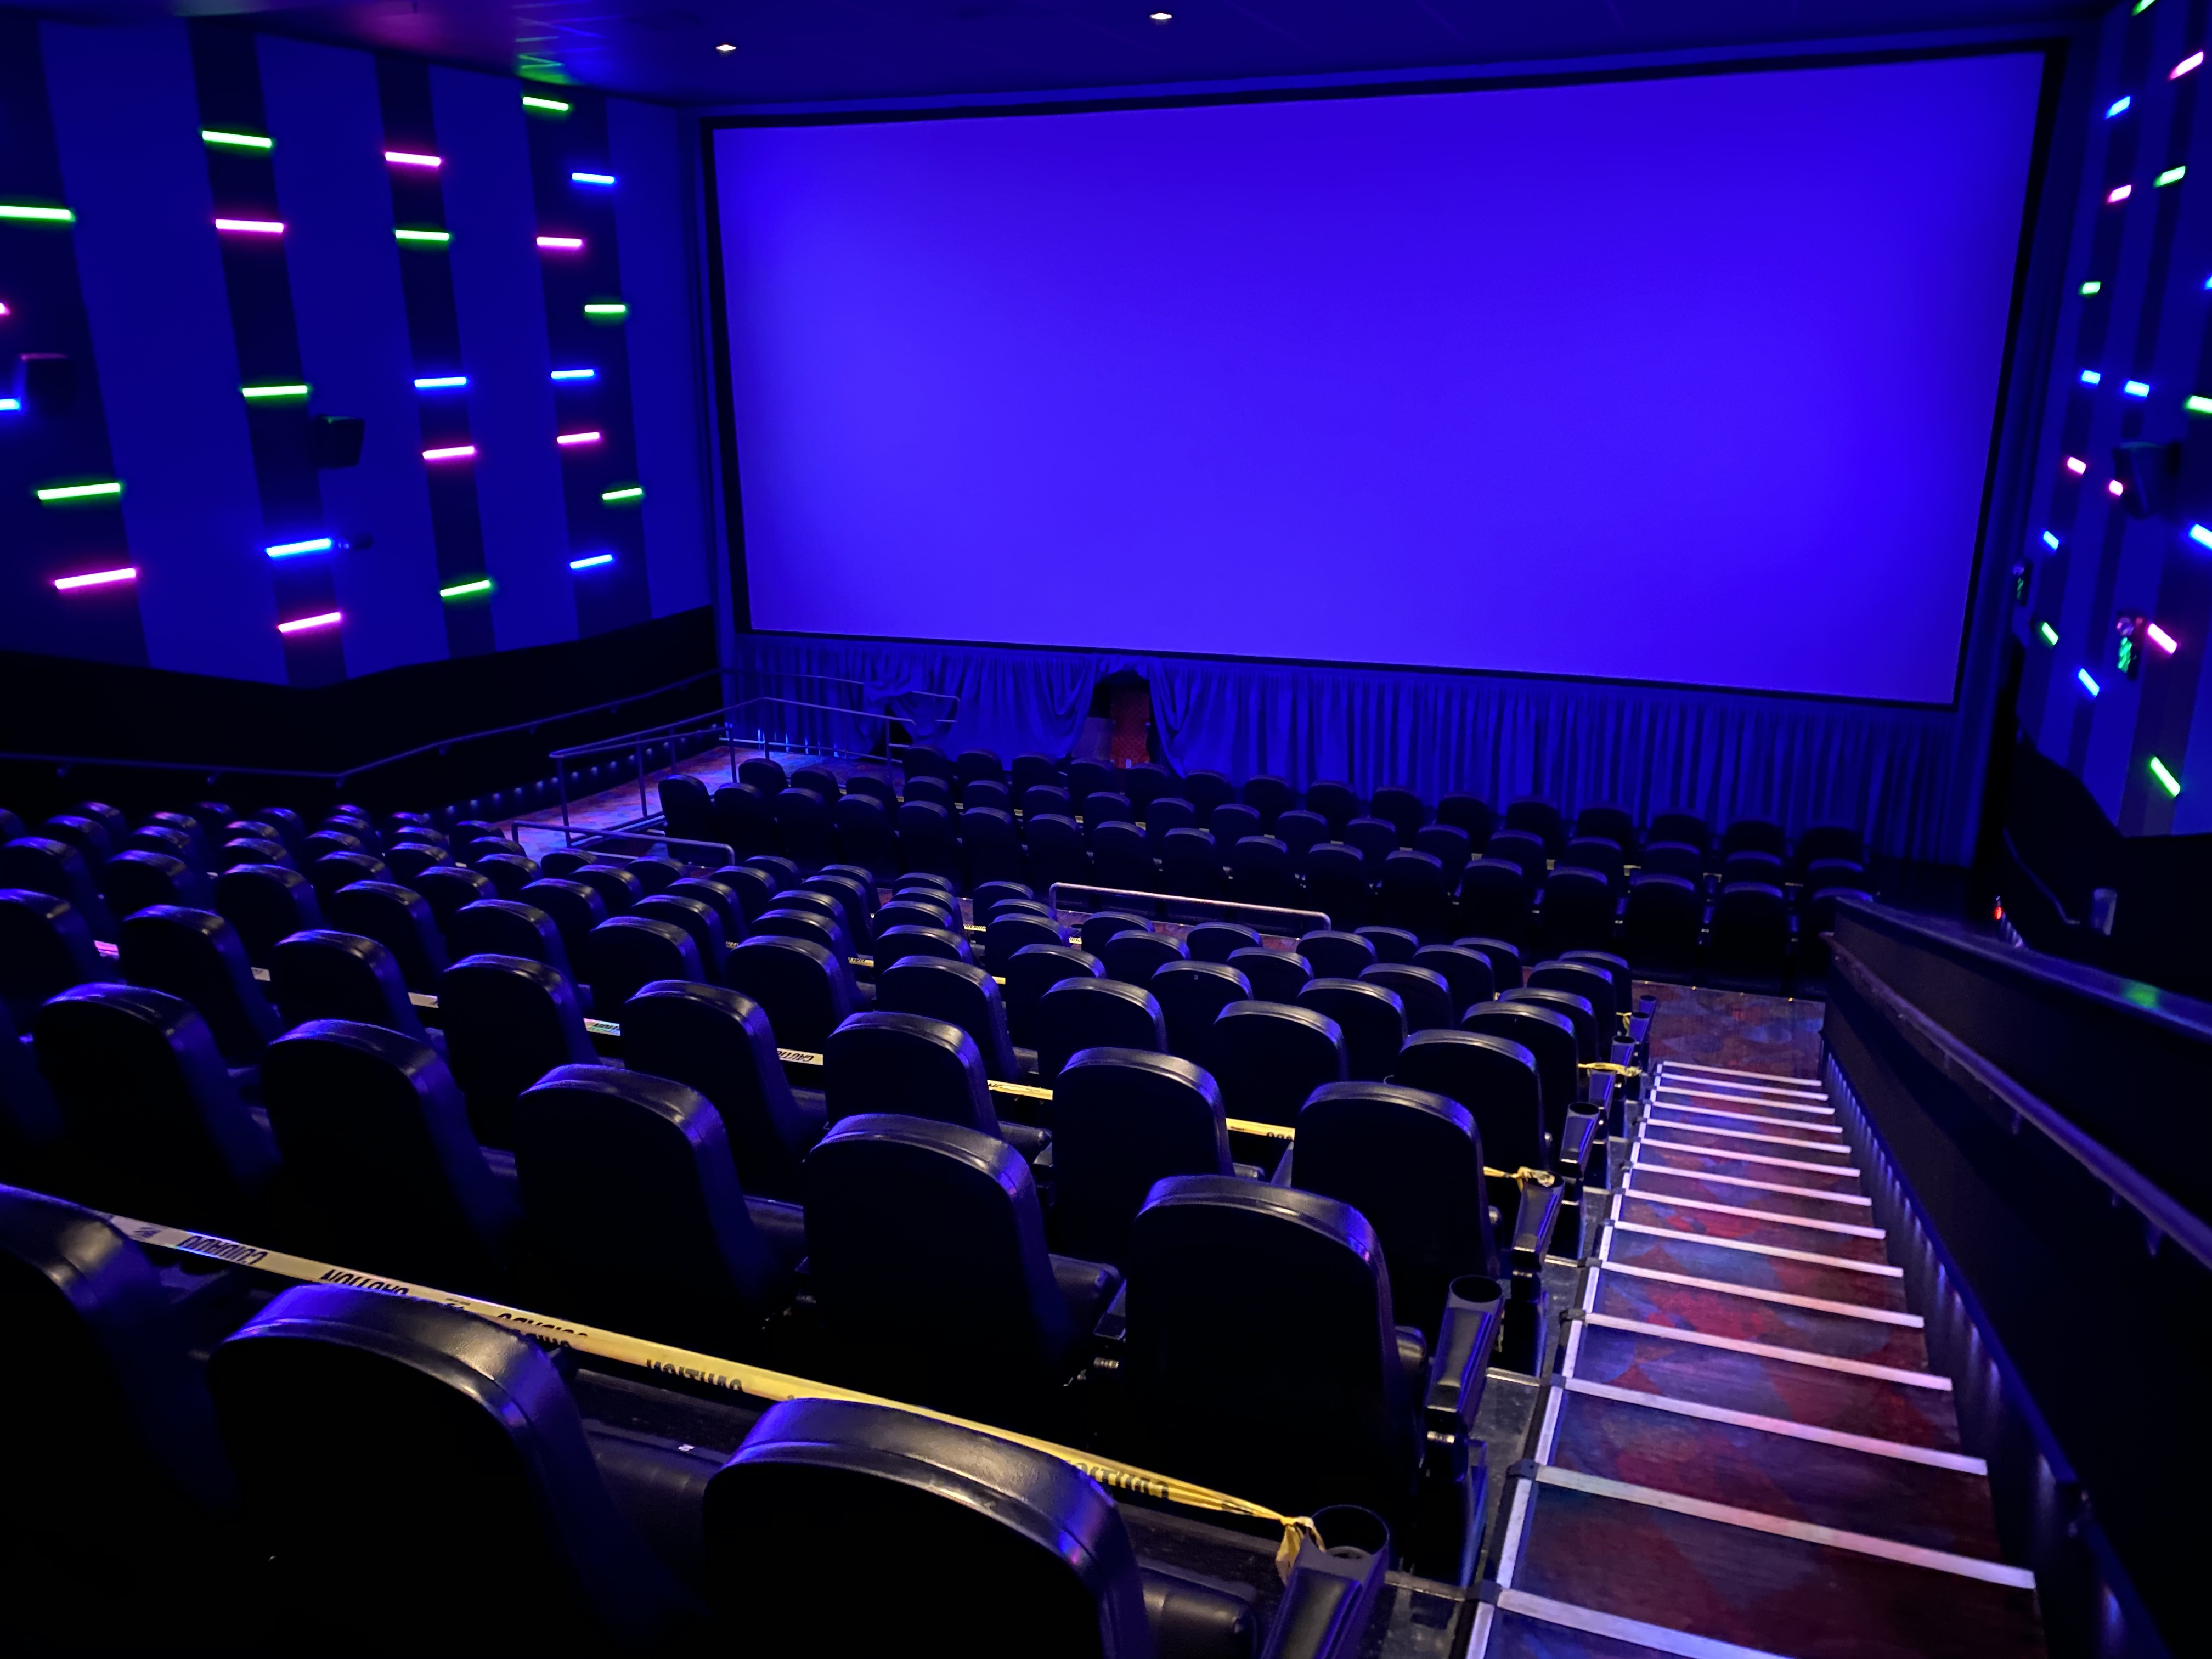 CineLux Almaden - Inside the theater